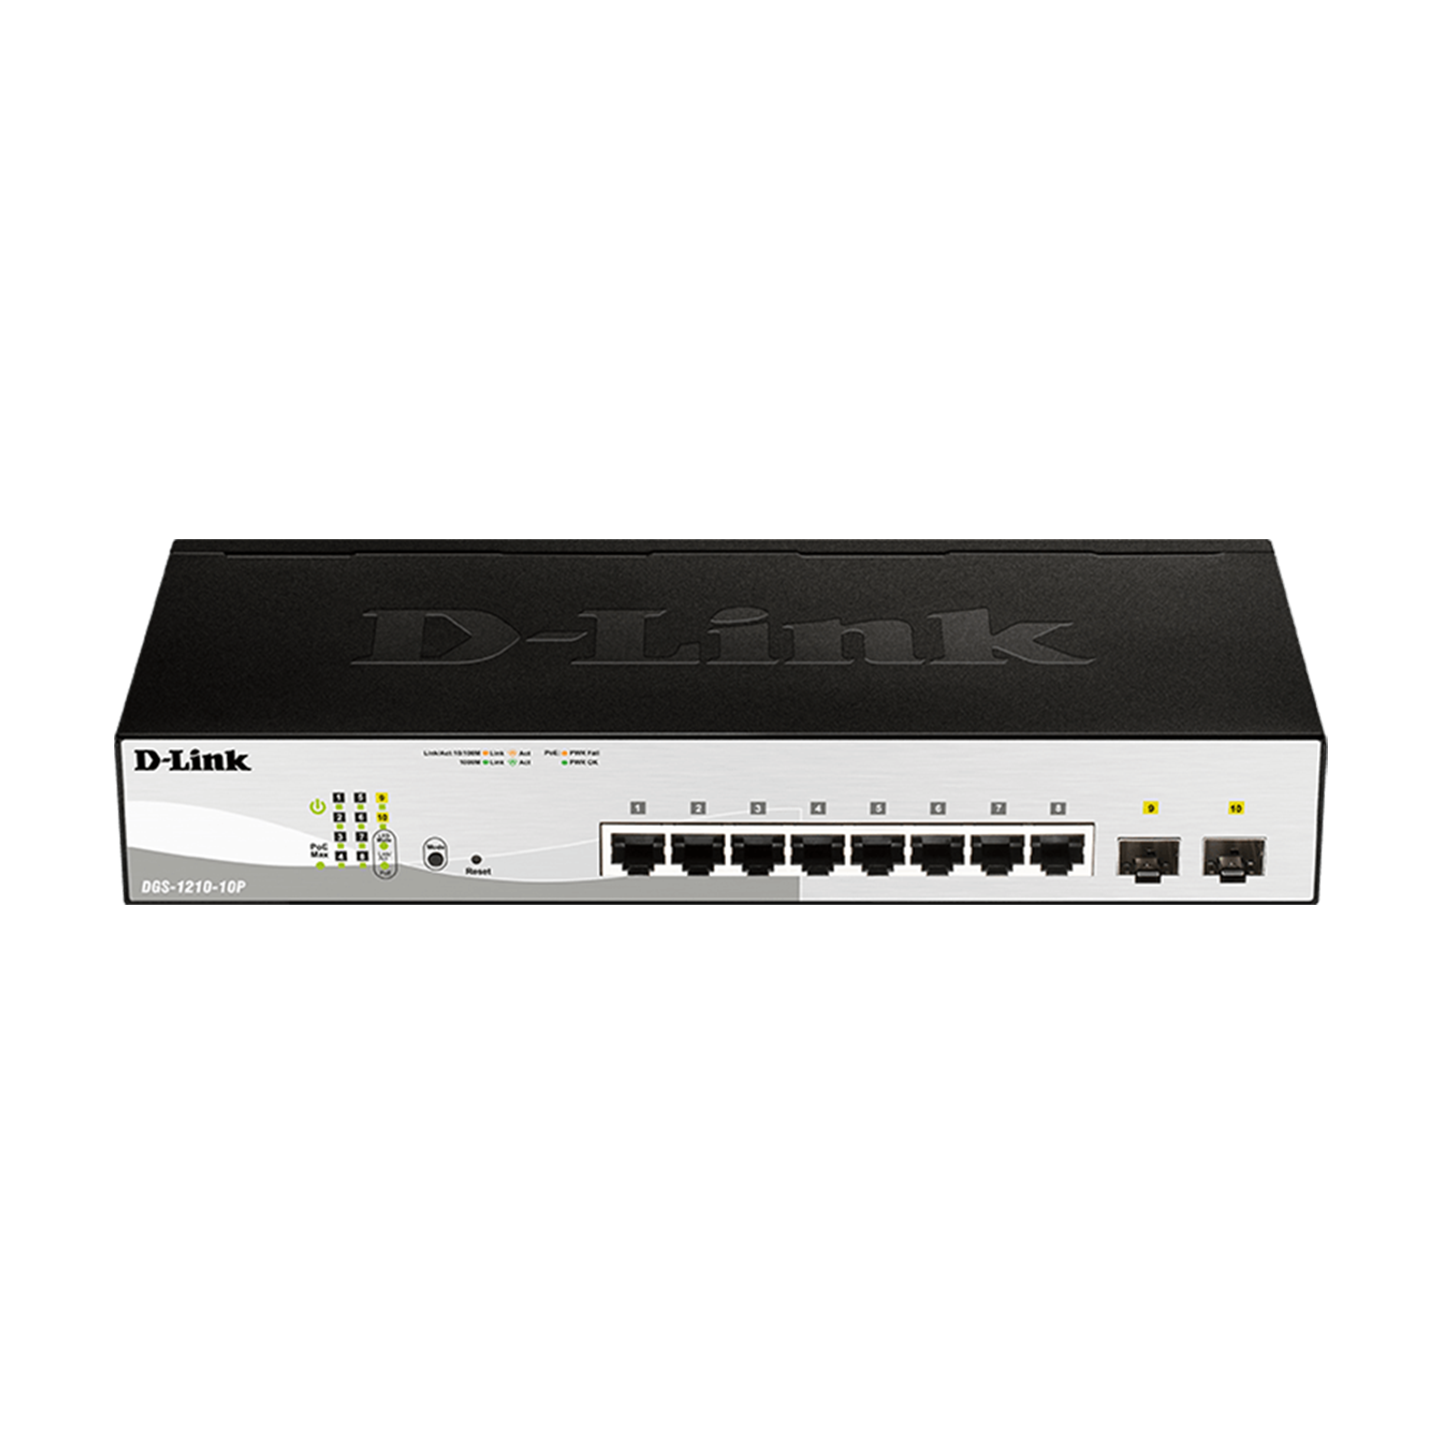 D Link 10 Port POE Gigabit Smart Managed Network Switch - DGS-1210-10P